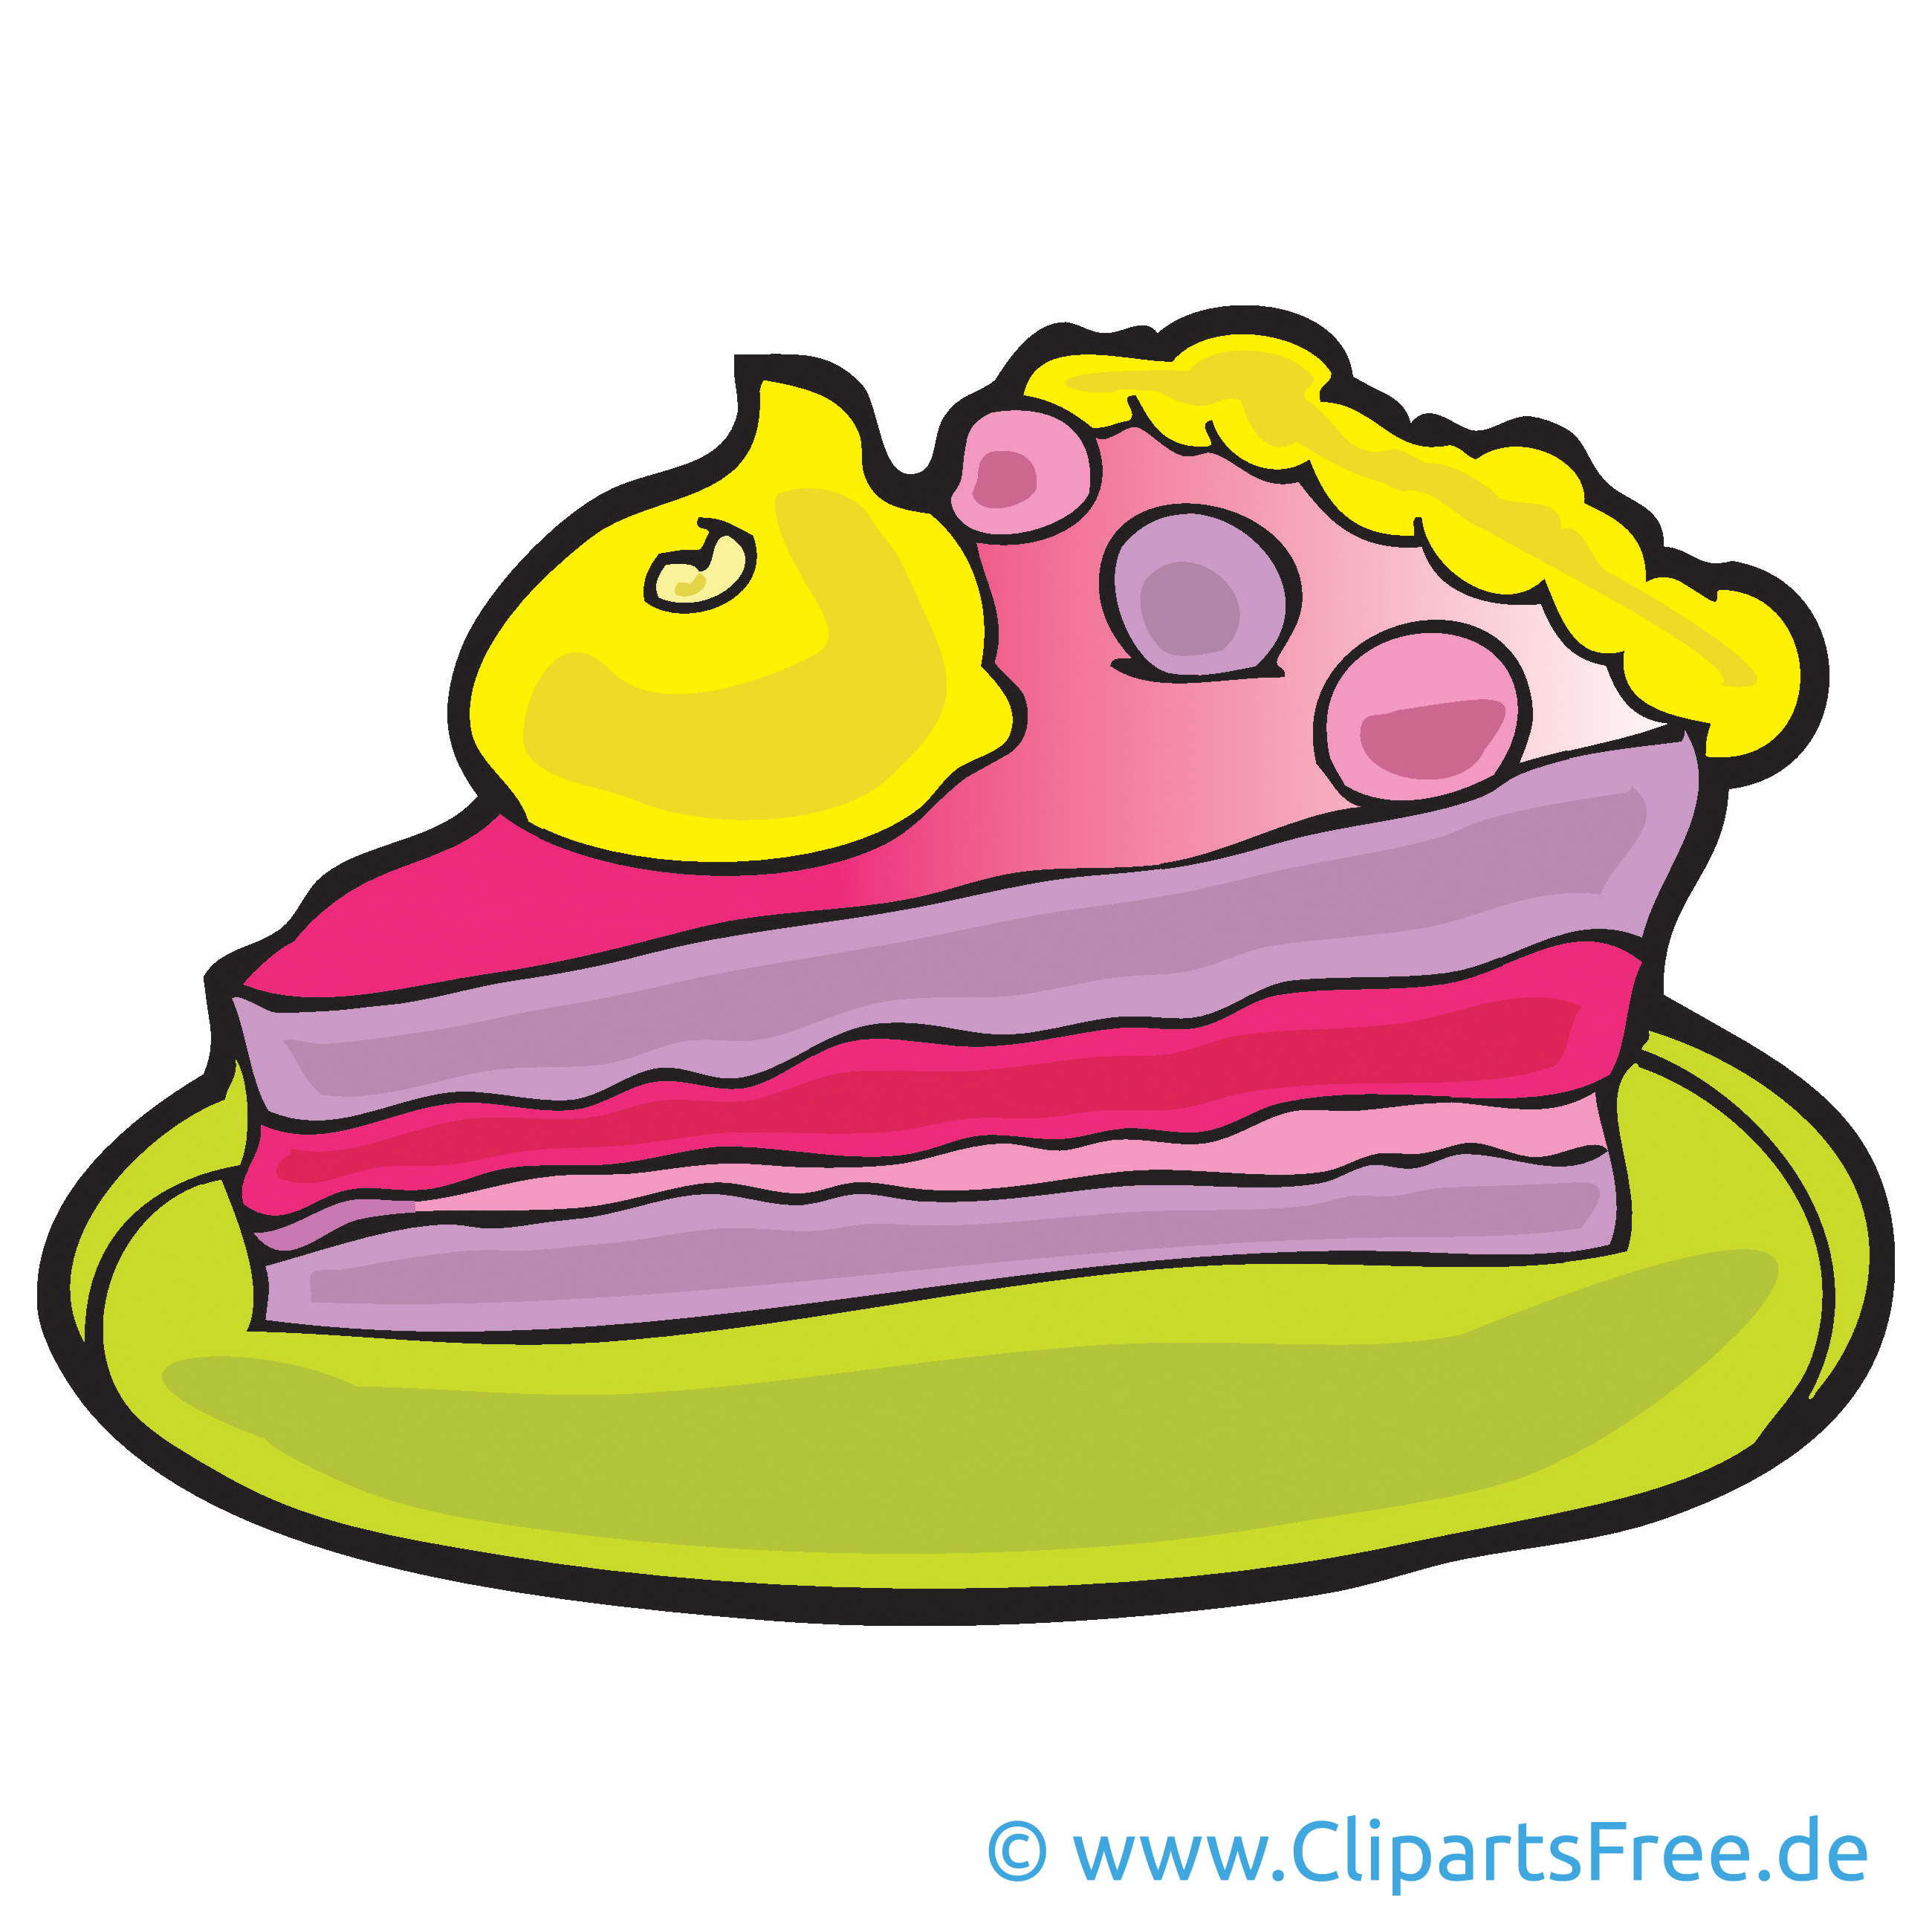 clipart torte gratis - photo #4